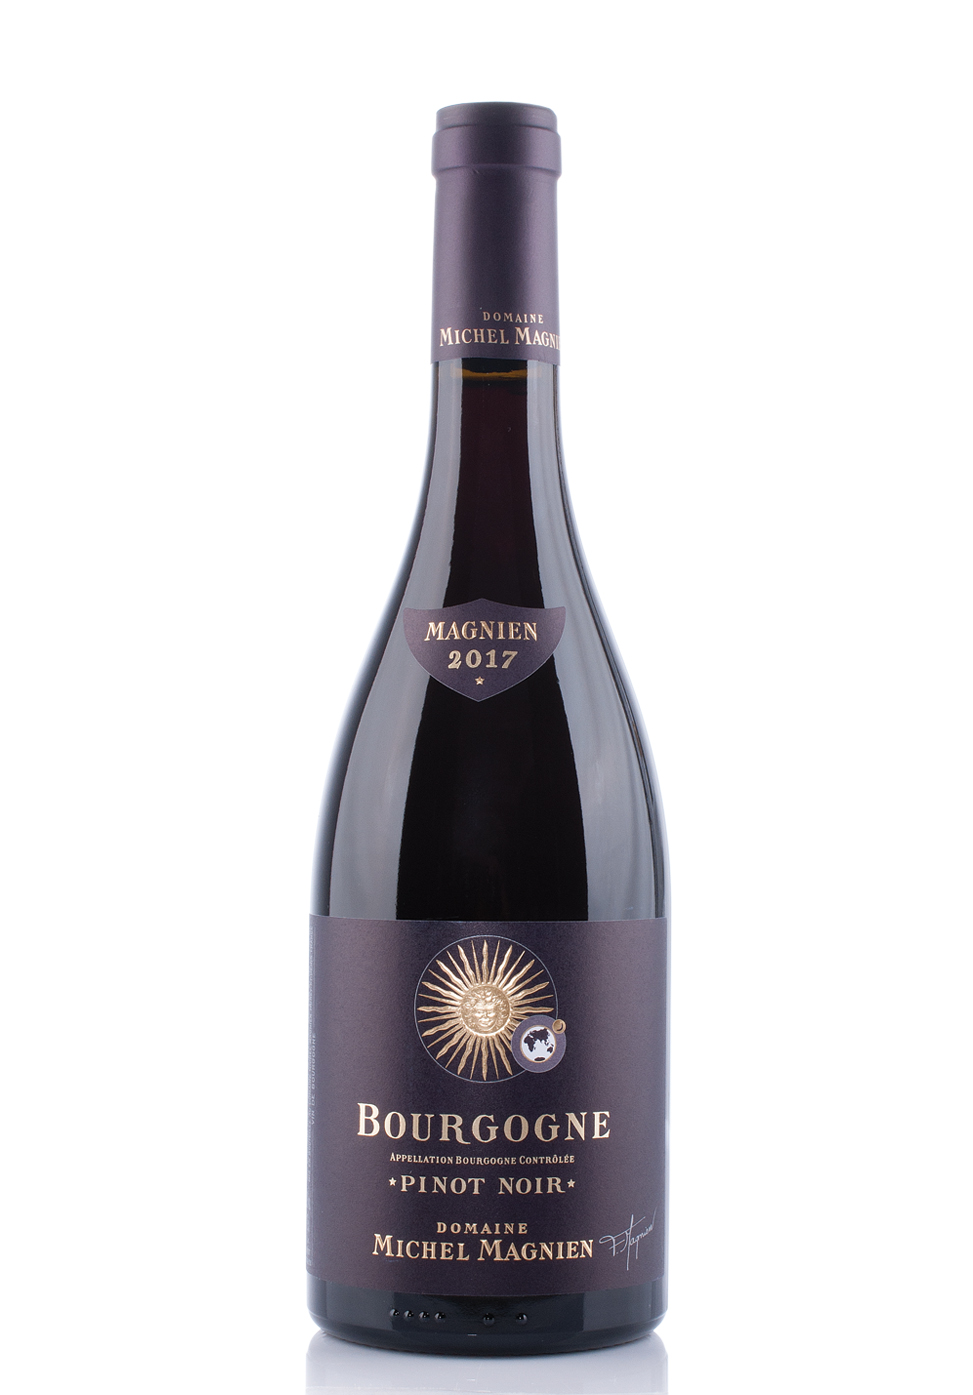 Vin Domaine M. Magnien, Bourgogne 2017 (0.75L)